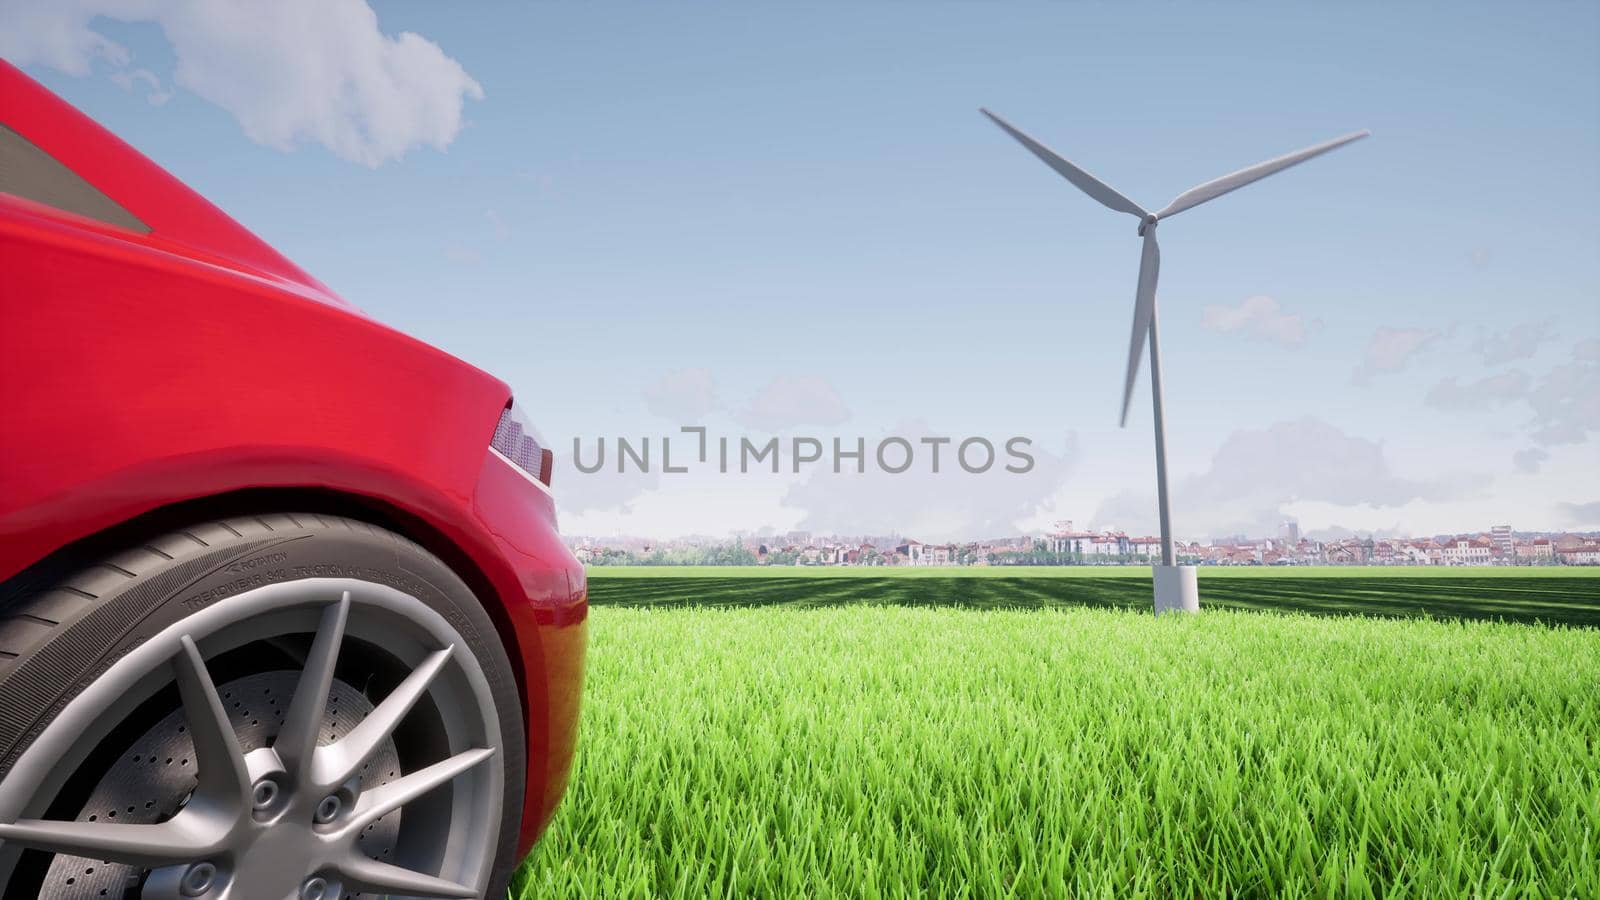 Car wind generator Sustainable clean green Renewable energy Wind turbine Alternative power 3d render